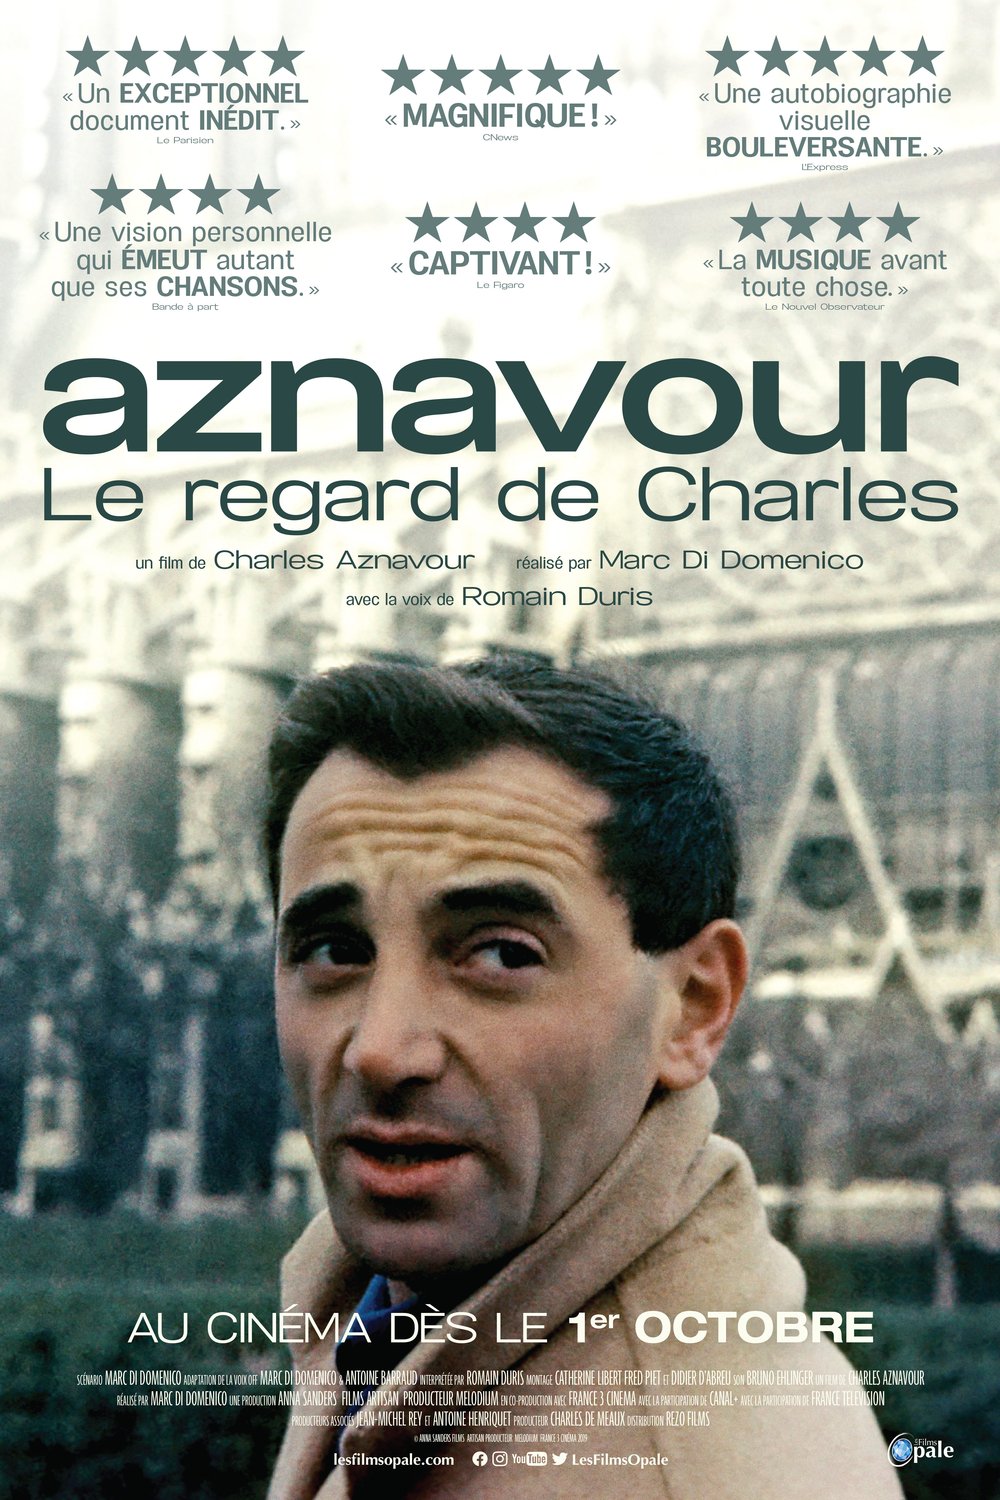 Poster of the movie Aznavour, le regard de Charles